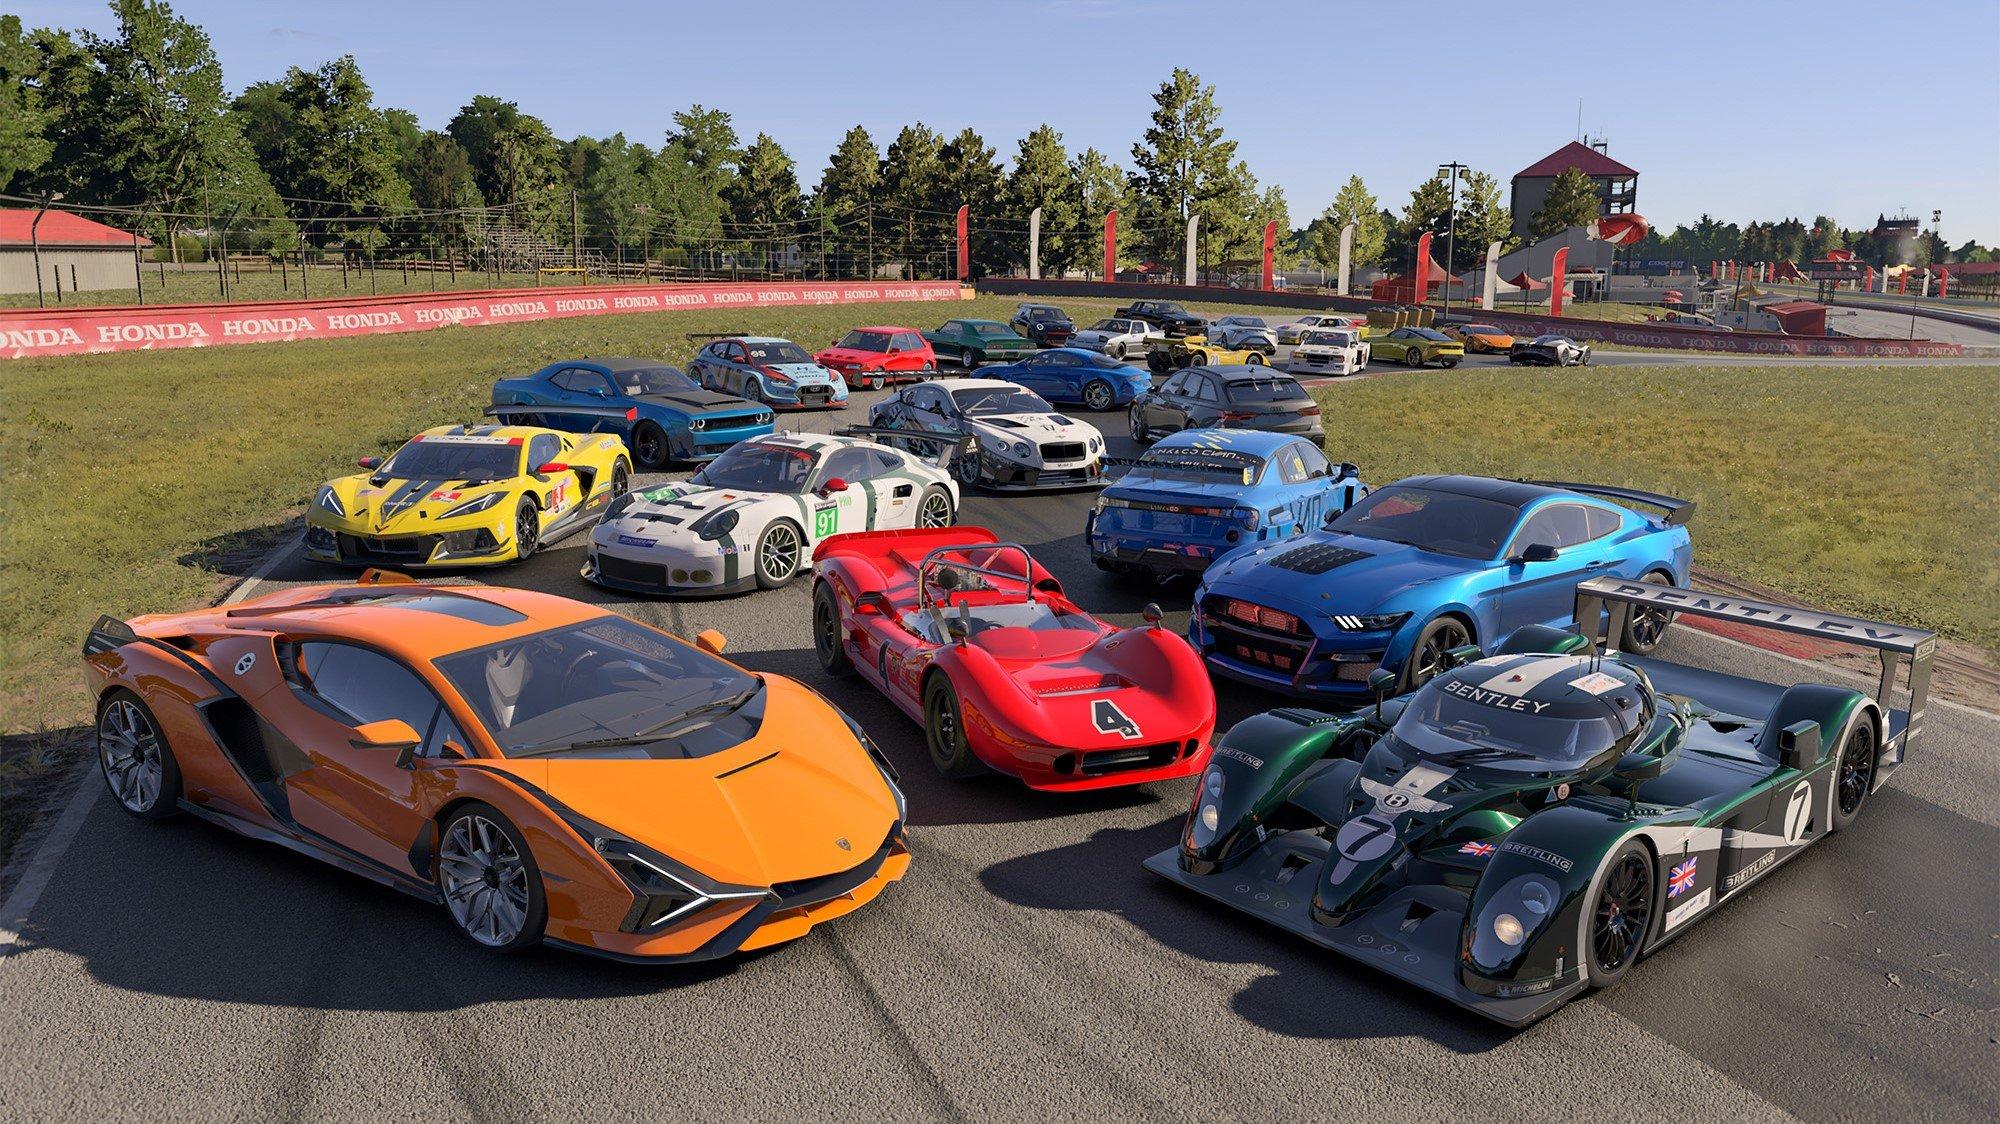 Comprar Forza Motorsport (PC / Xbox Series X